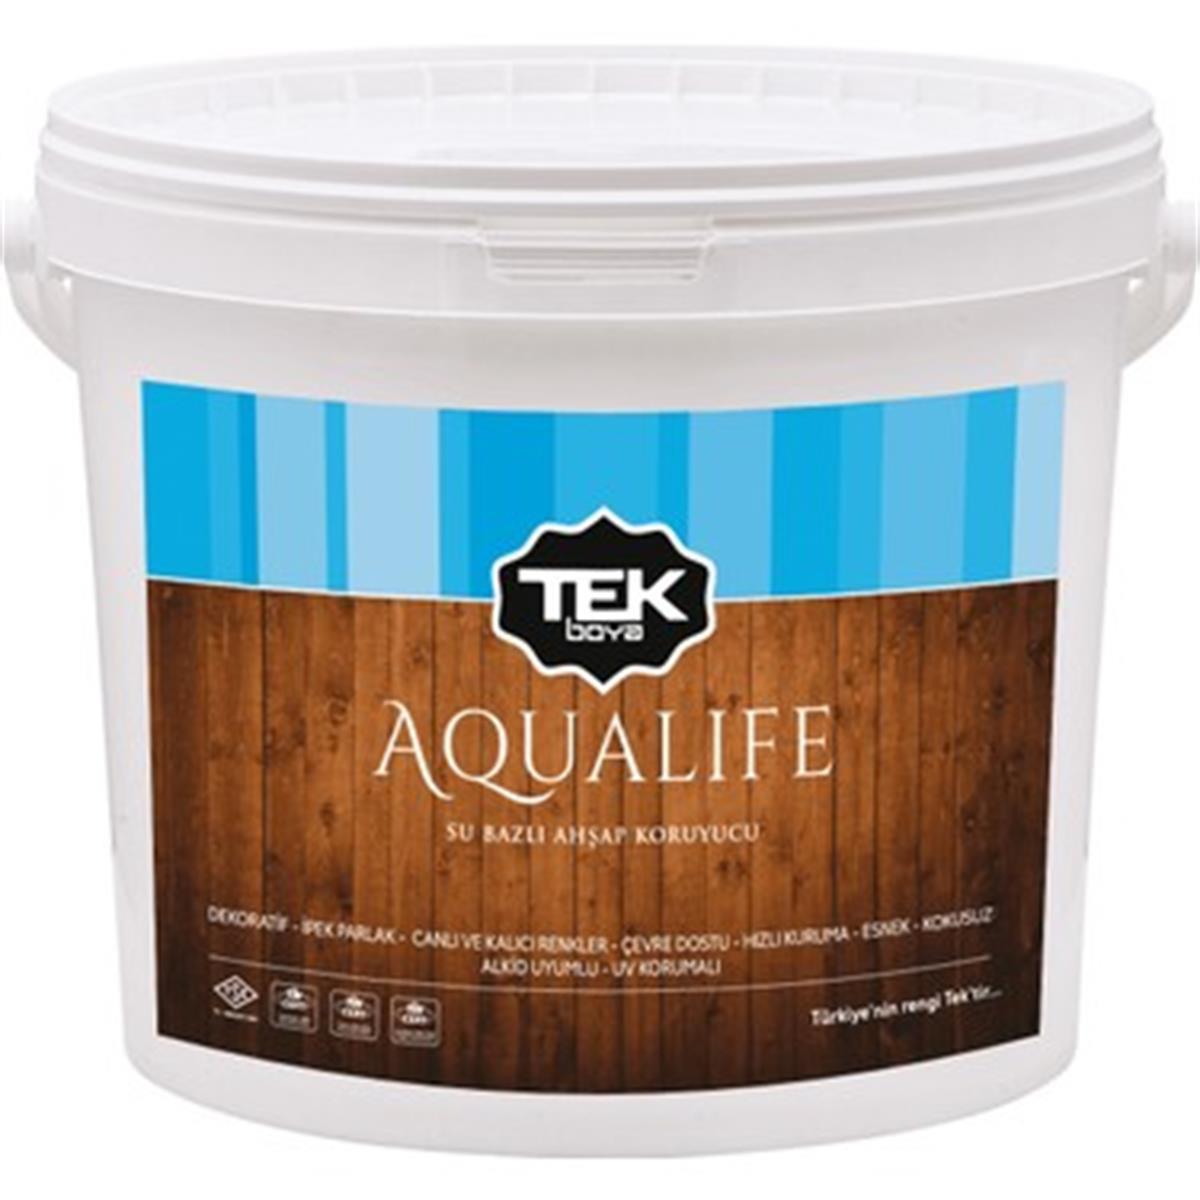 Tek Boya Aqualine (Aqualife) Su Bazlı Ahşap Koruyucu Kokusuz 15 Litre